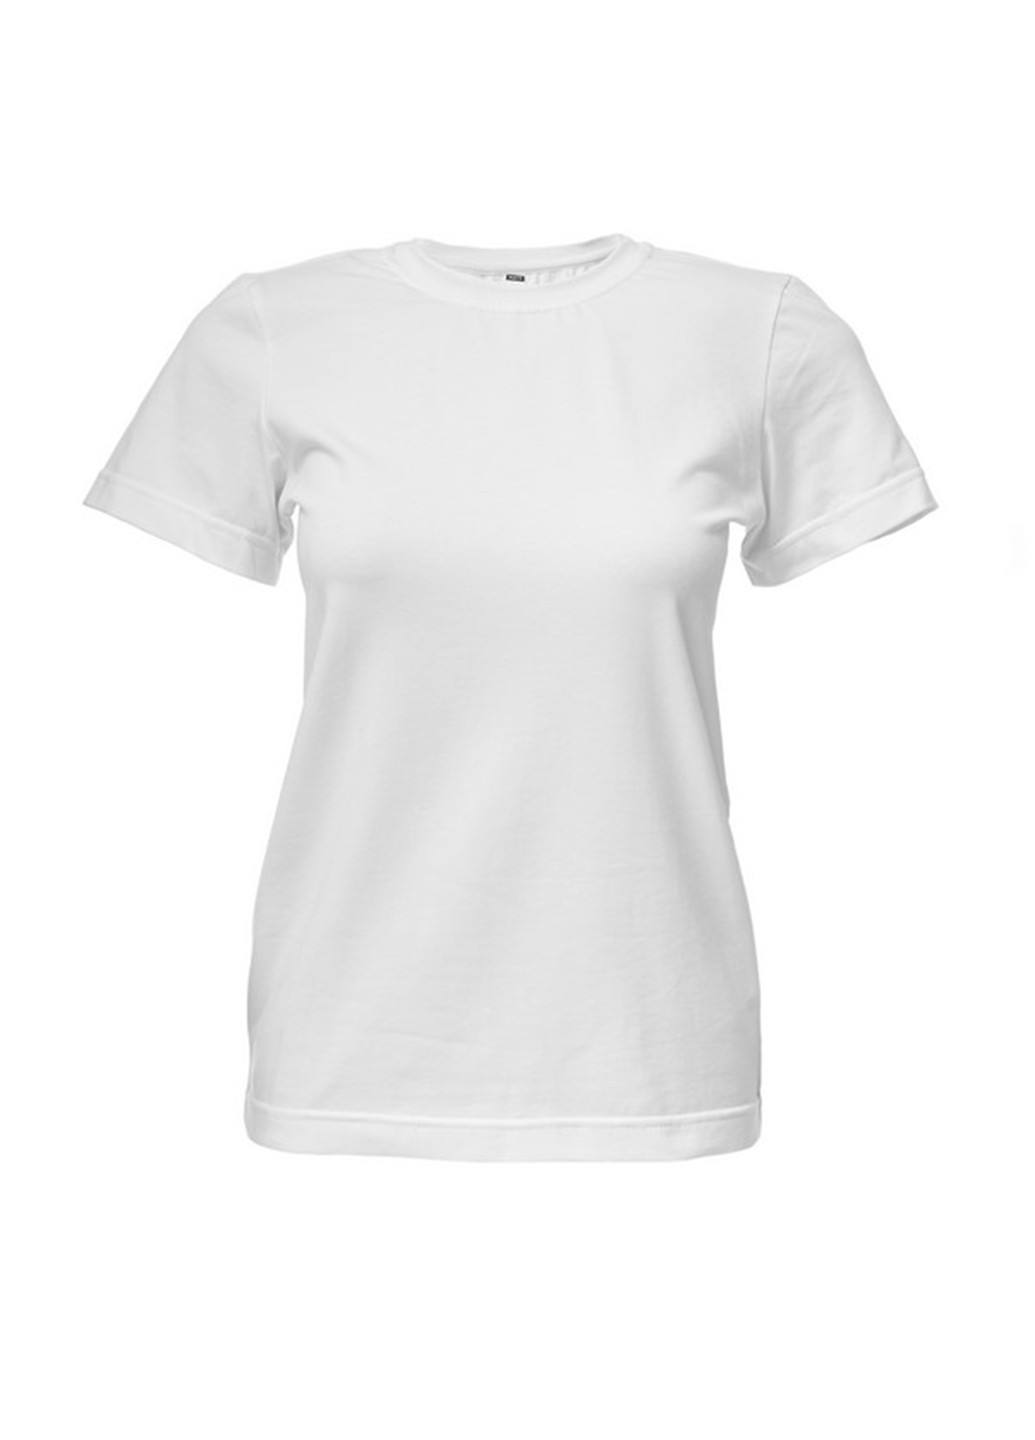 Белая летняя футболка MaCo exclusive